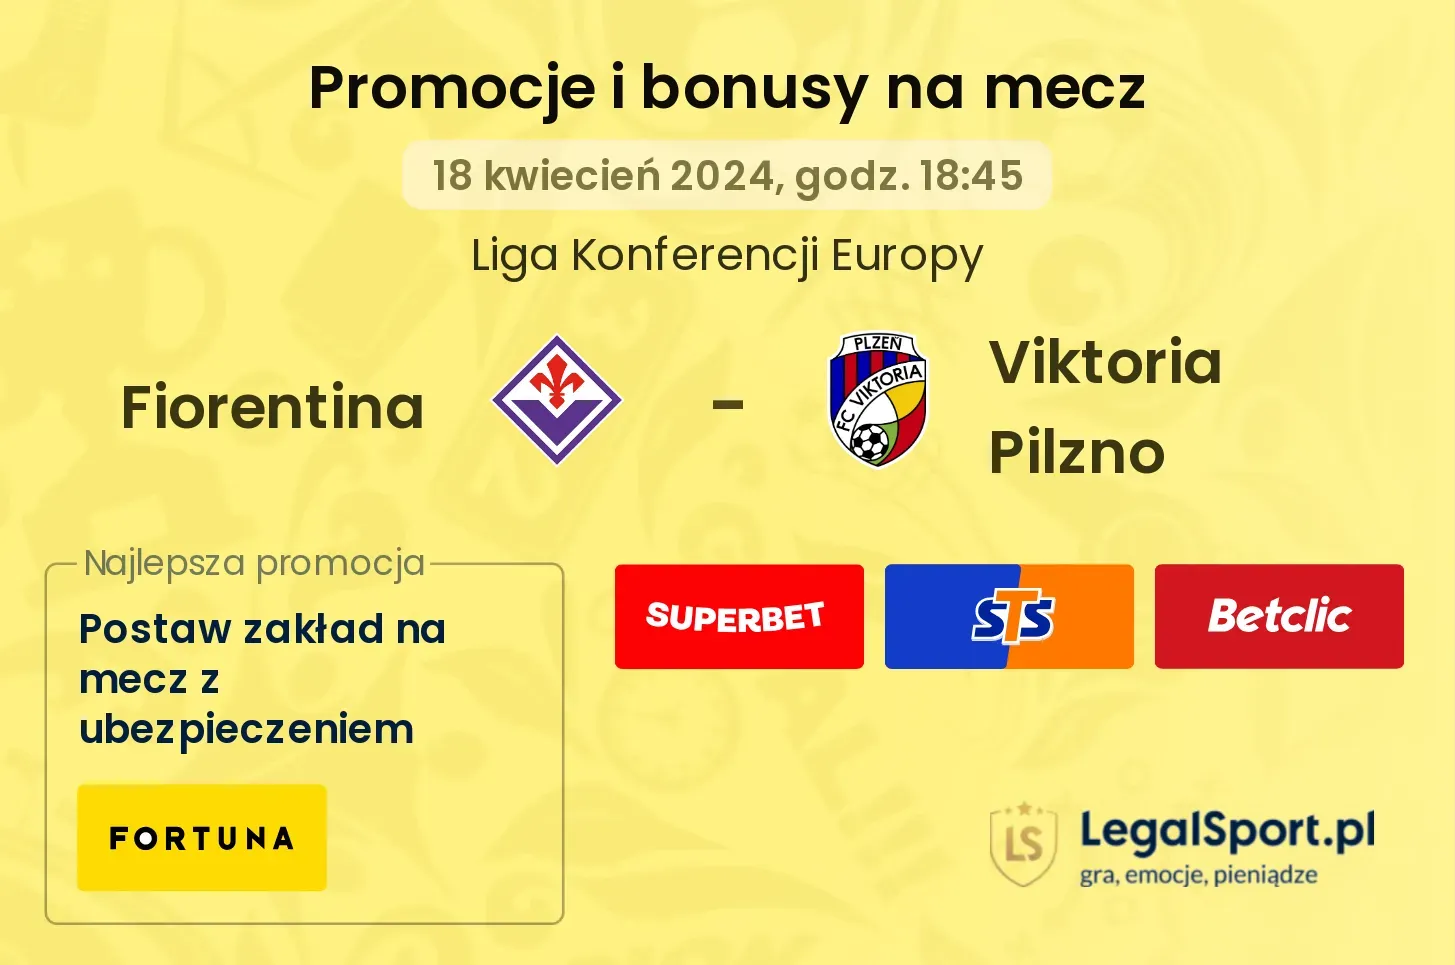 Fiorentina - Viktoria Pilzno promocje bonusy na mecz